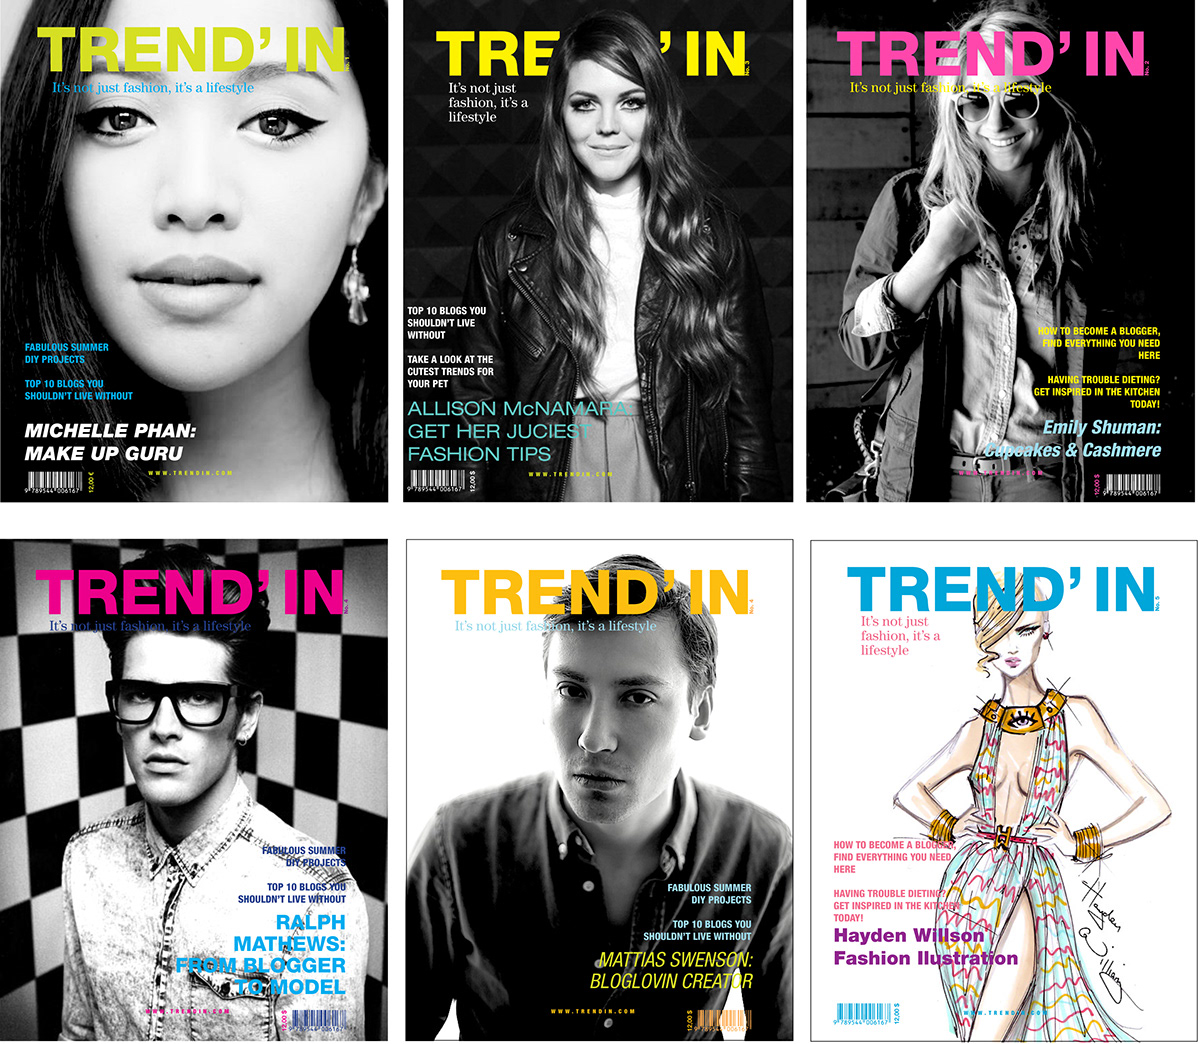 fashion magazine editorial blog articles fashion news fashion blogs trends trendy magazine typo Helvetica Neue